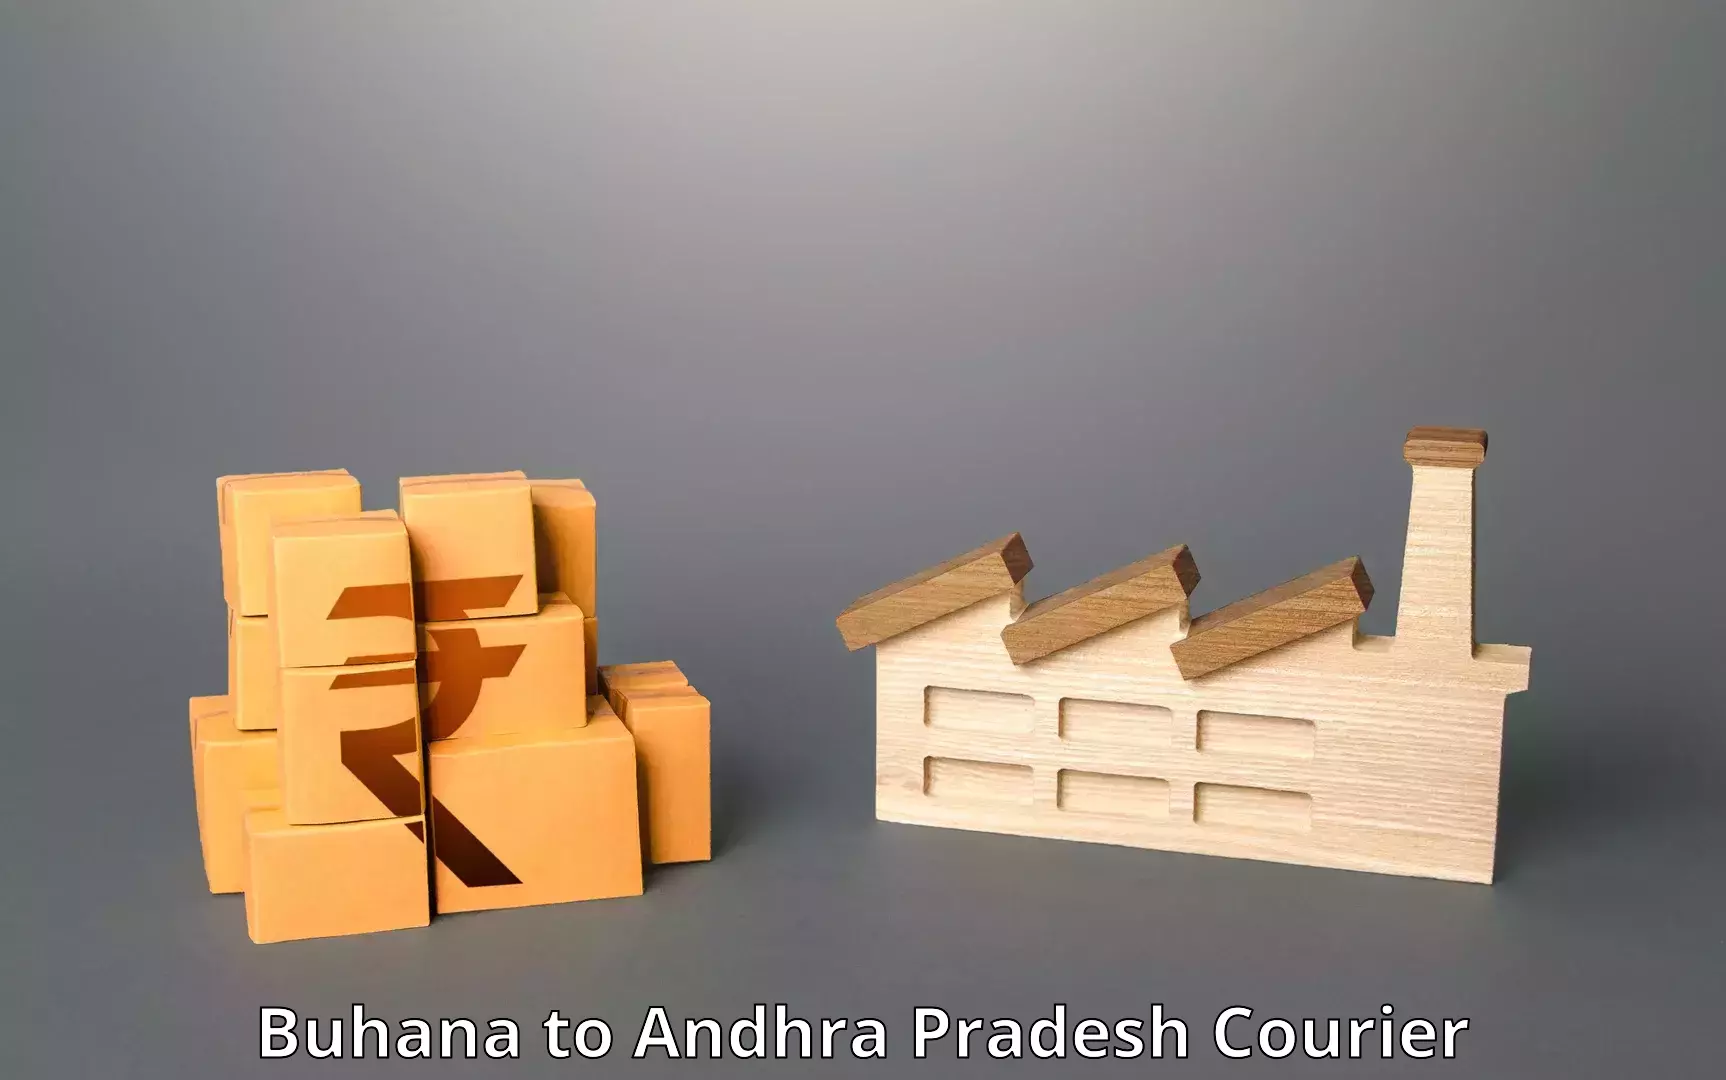 Courier service comparison Buhana to Tirupati